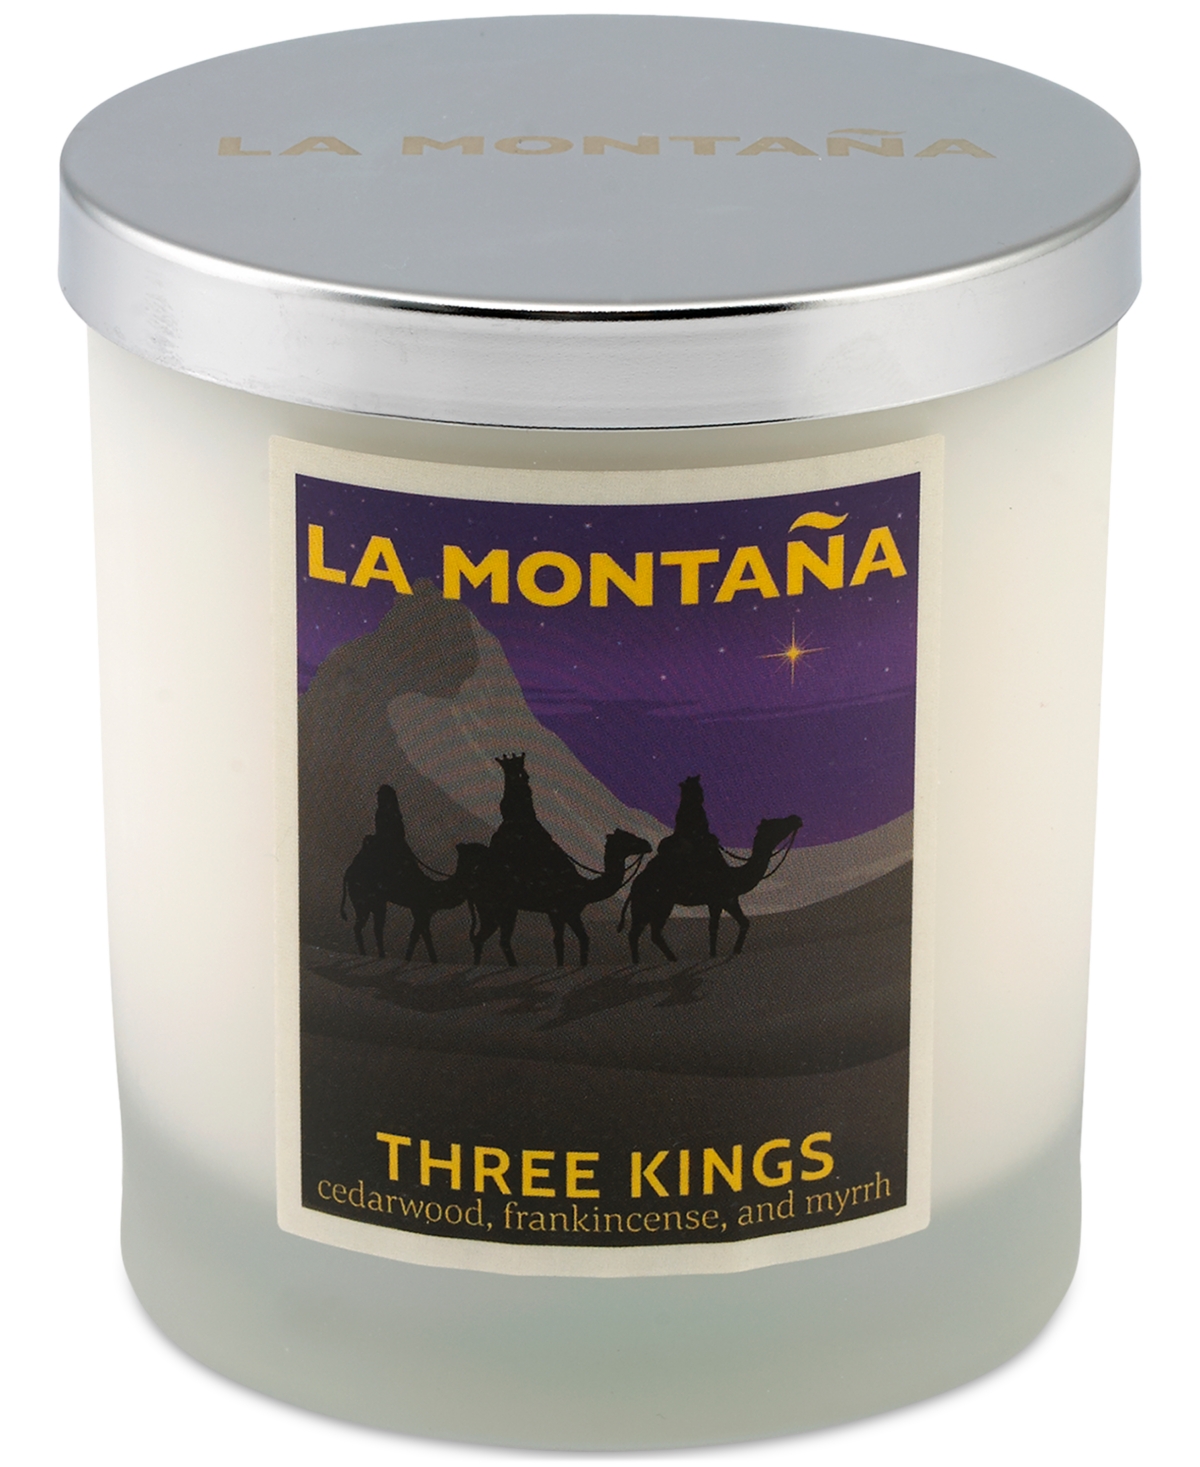 La Montana Three Kings Scented Candle, 8 oz.